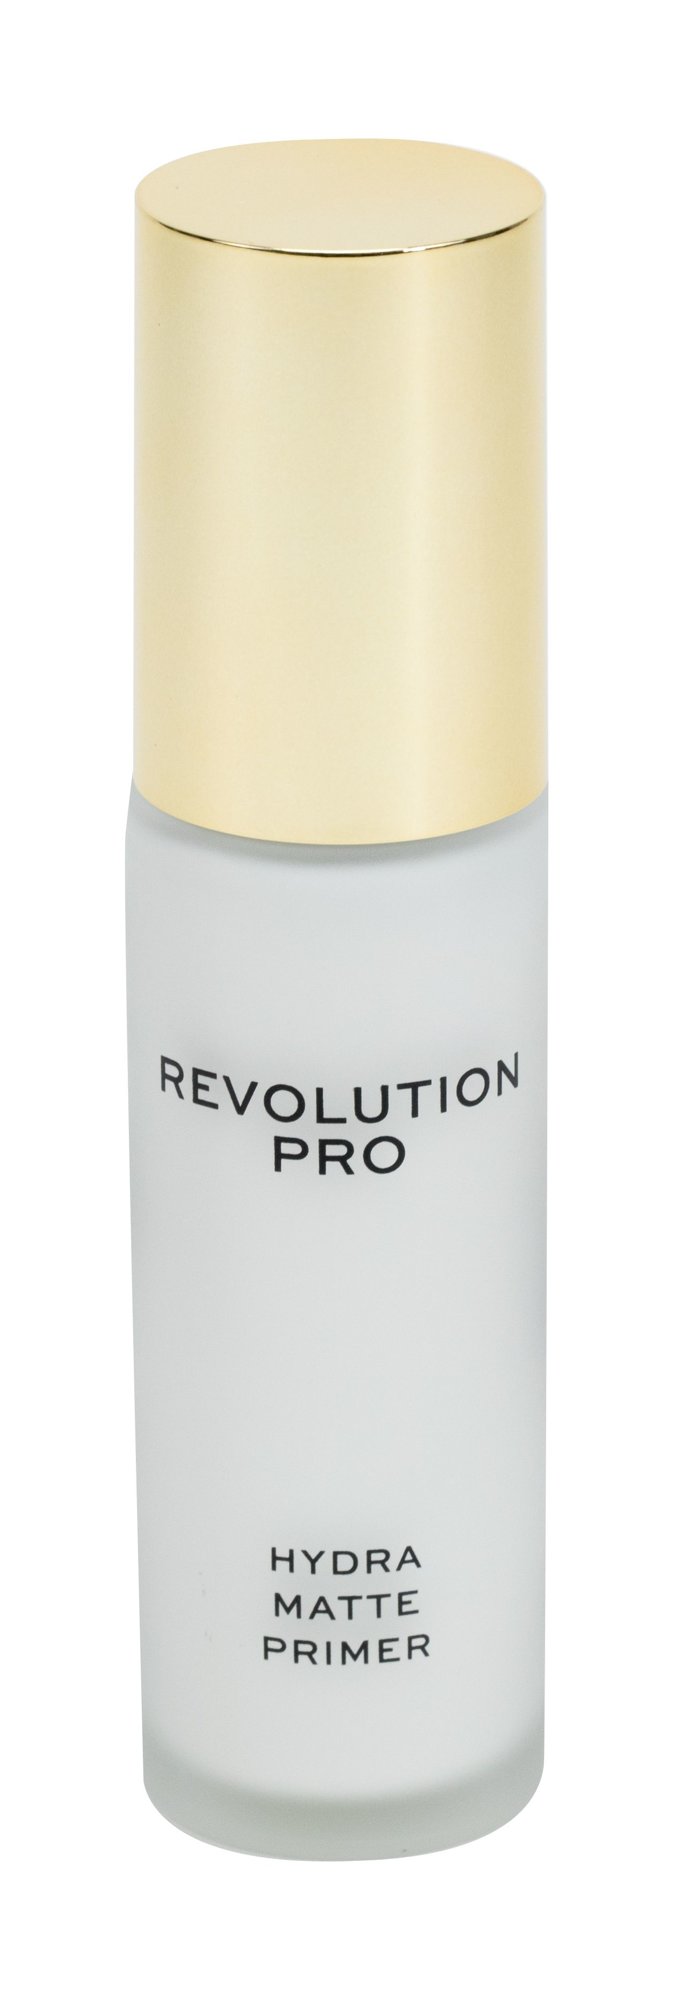 Makeup Revolution London Revolution PRO Hydra Matte Primer 30ml primeris